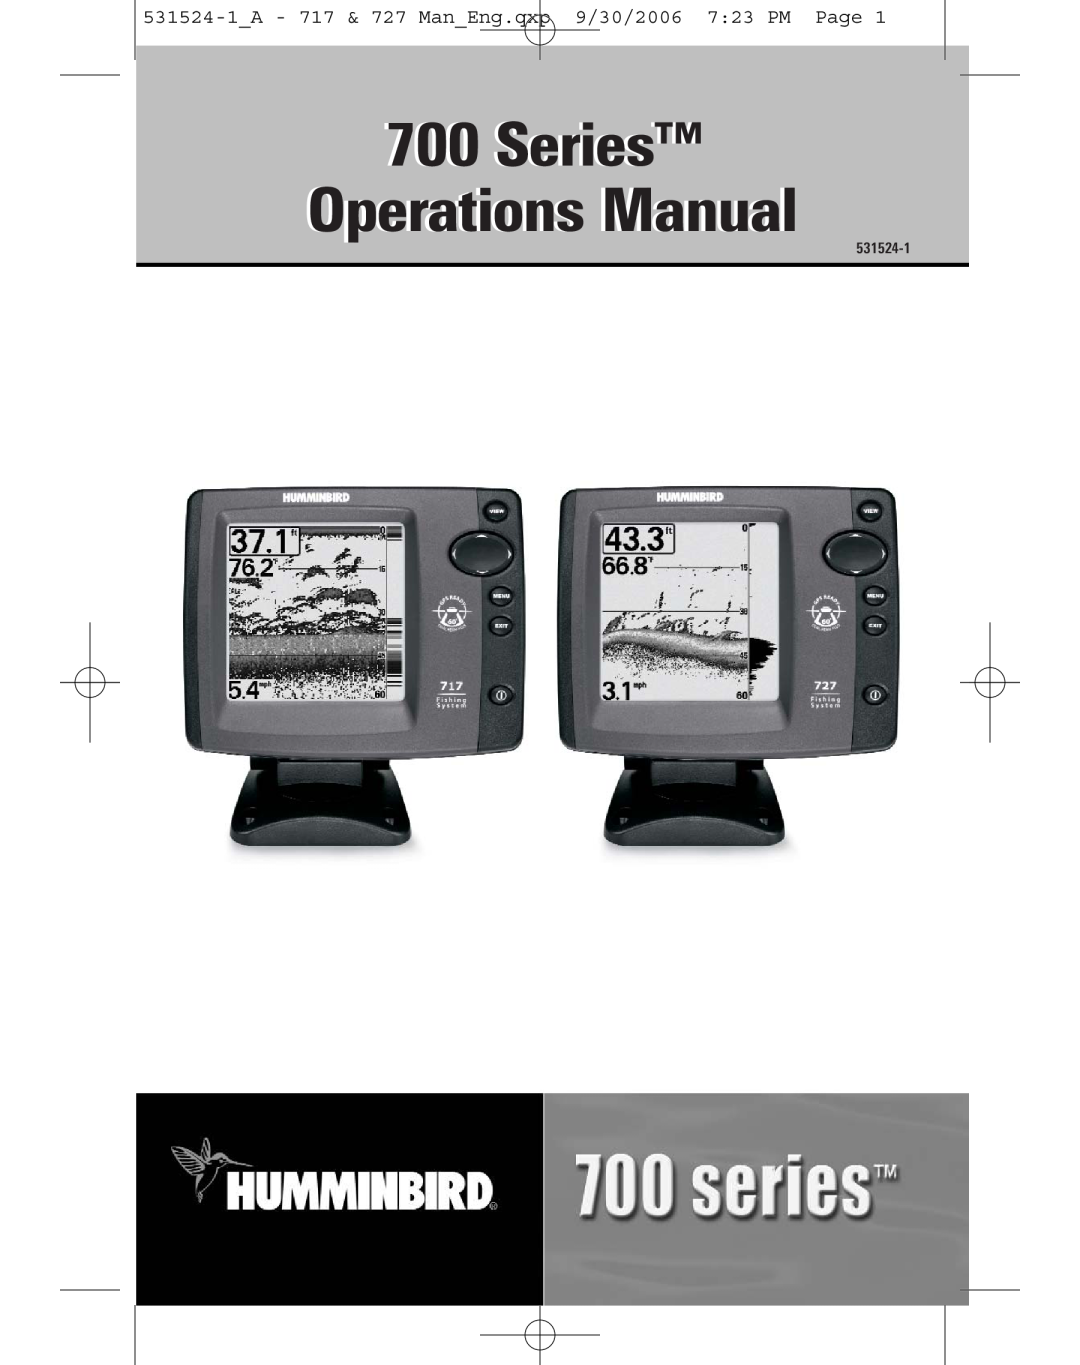 Humminbird manual Series Operations Manual, 531524-1A - 717 & 727 ManEng.qxp 9/30/2006 723 PM Page 